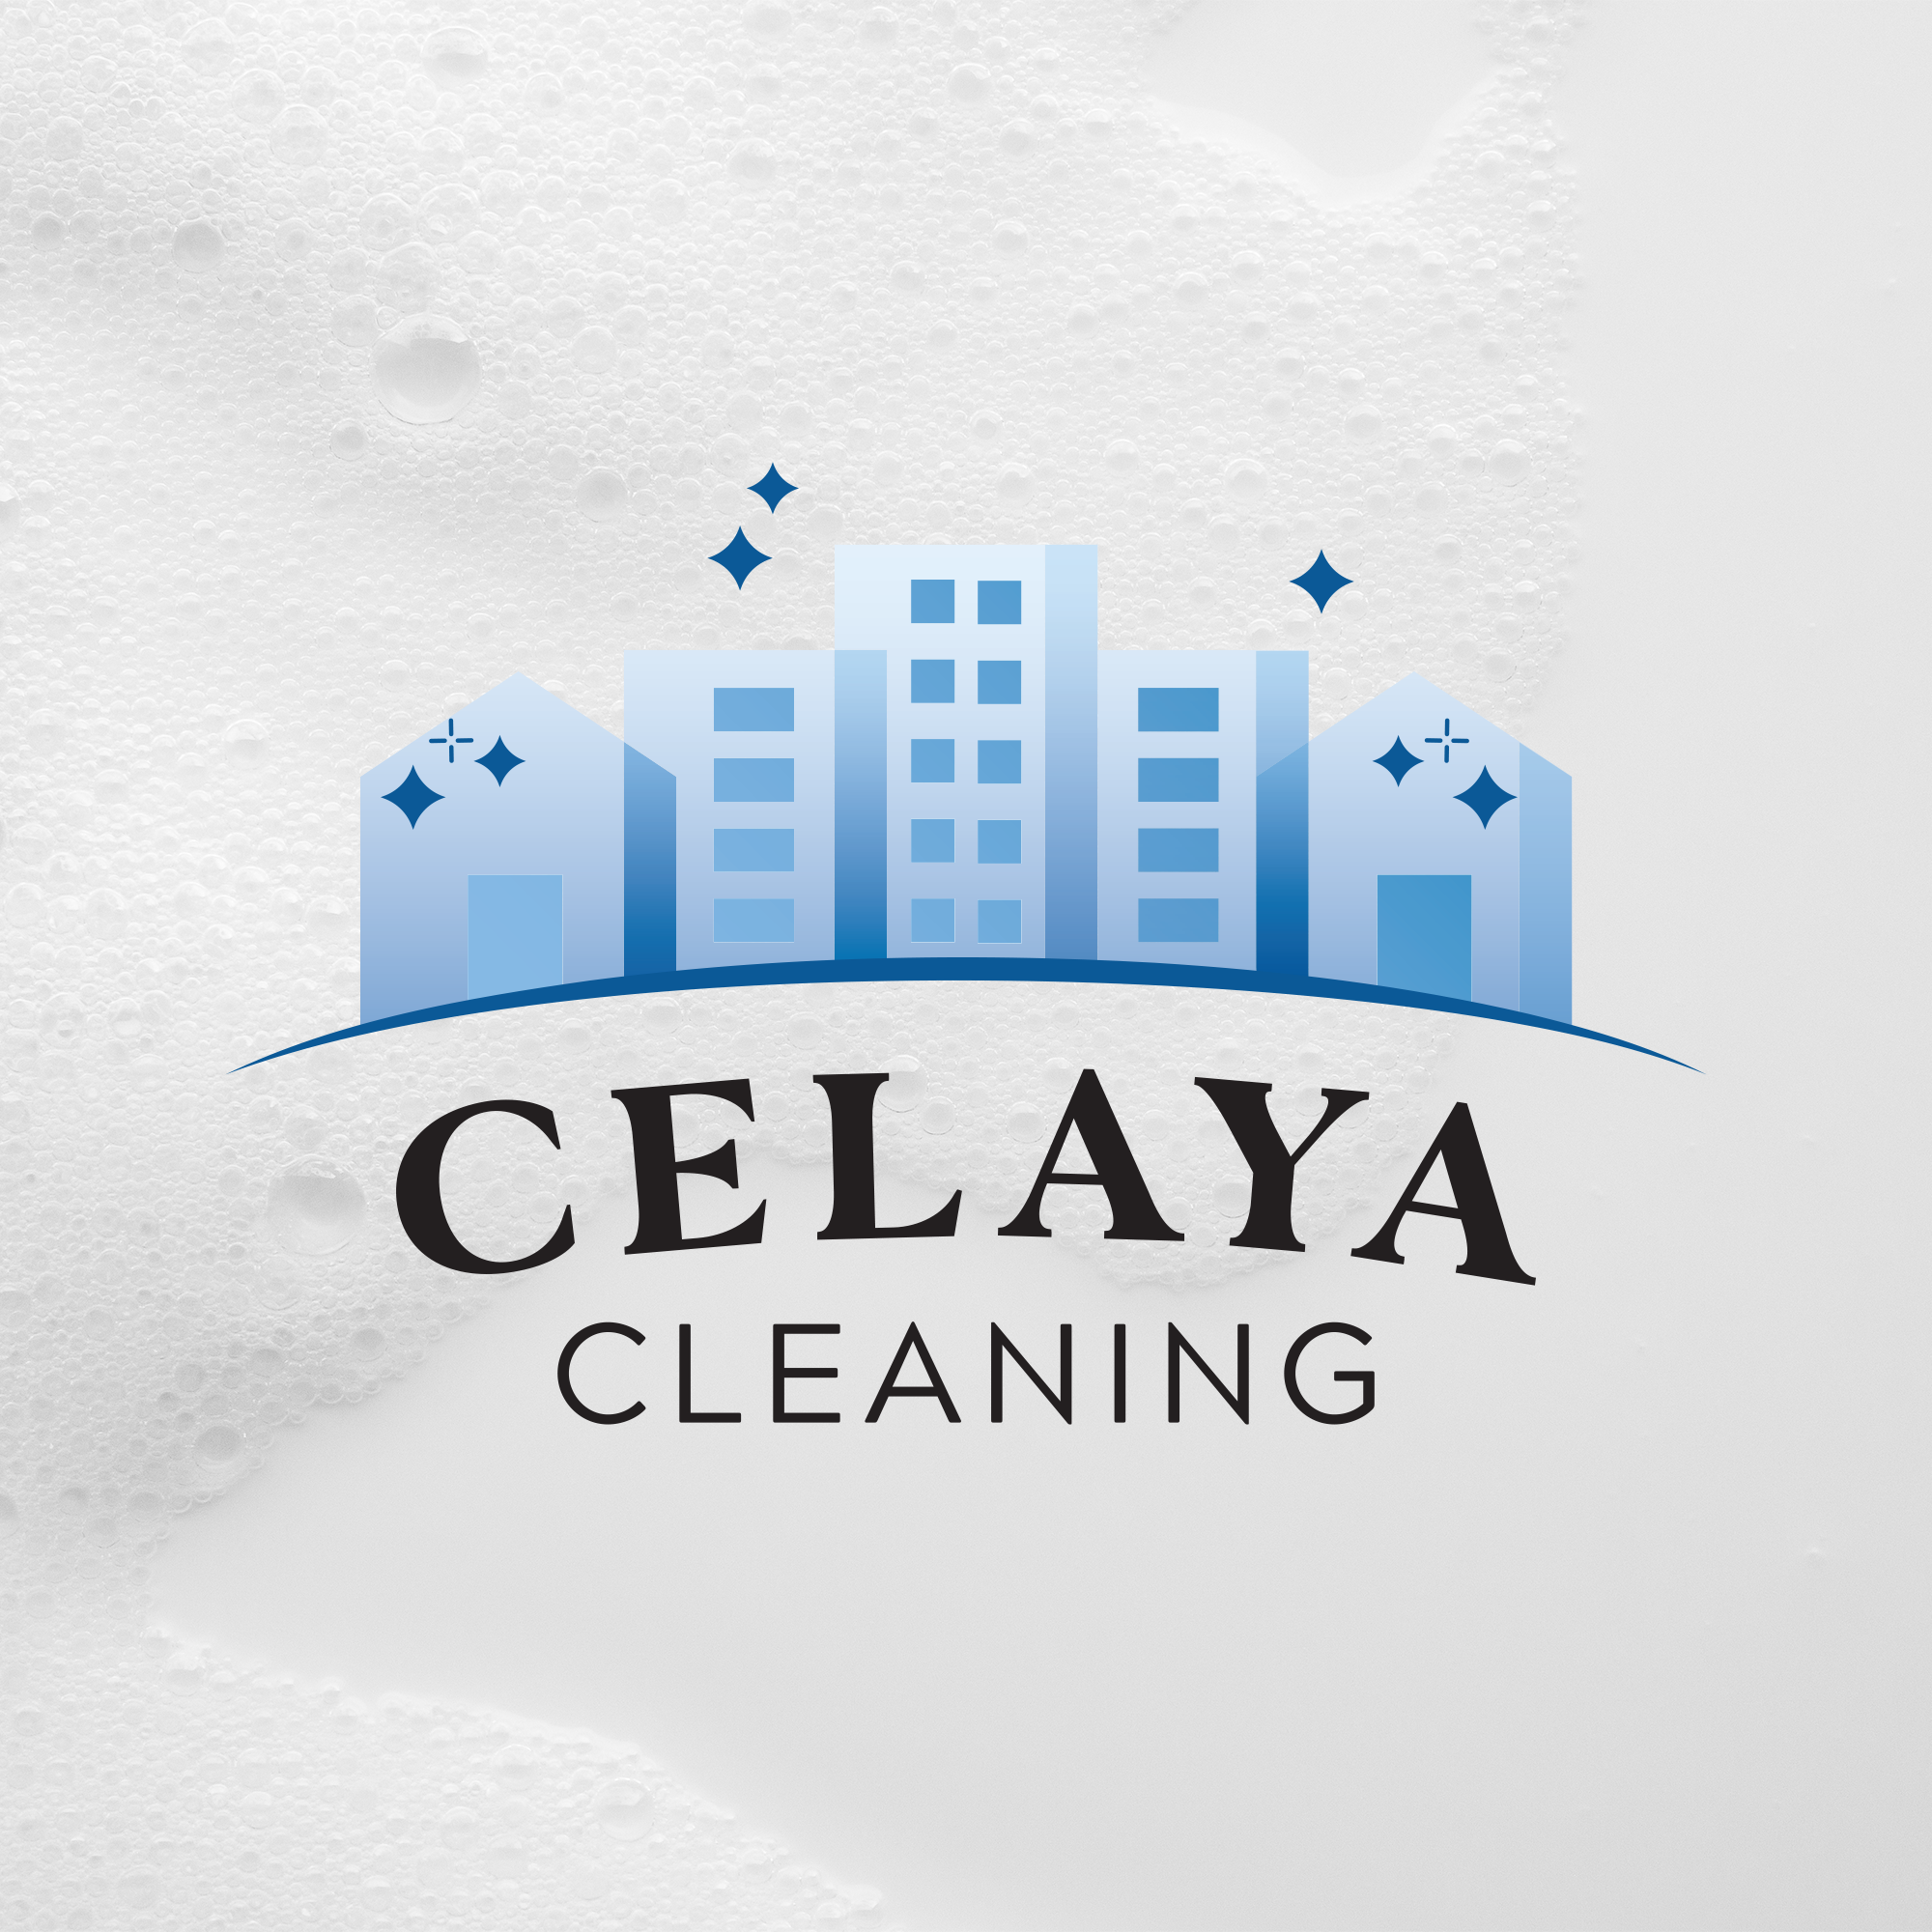 Celeya Cleaning custom logo design by Tingalls